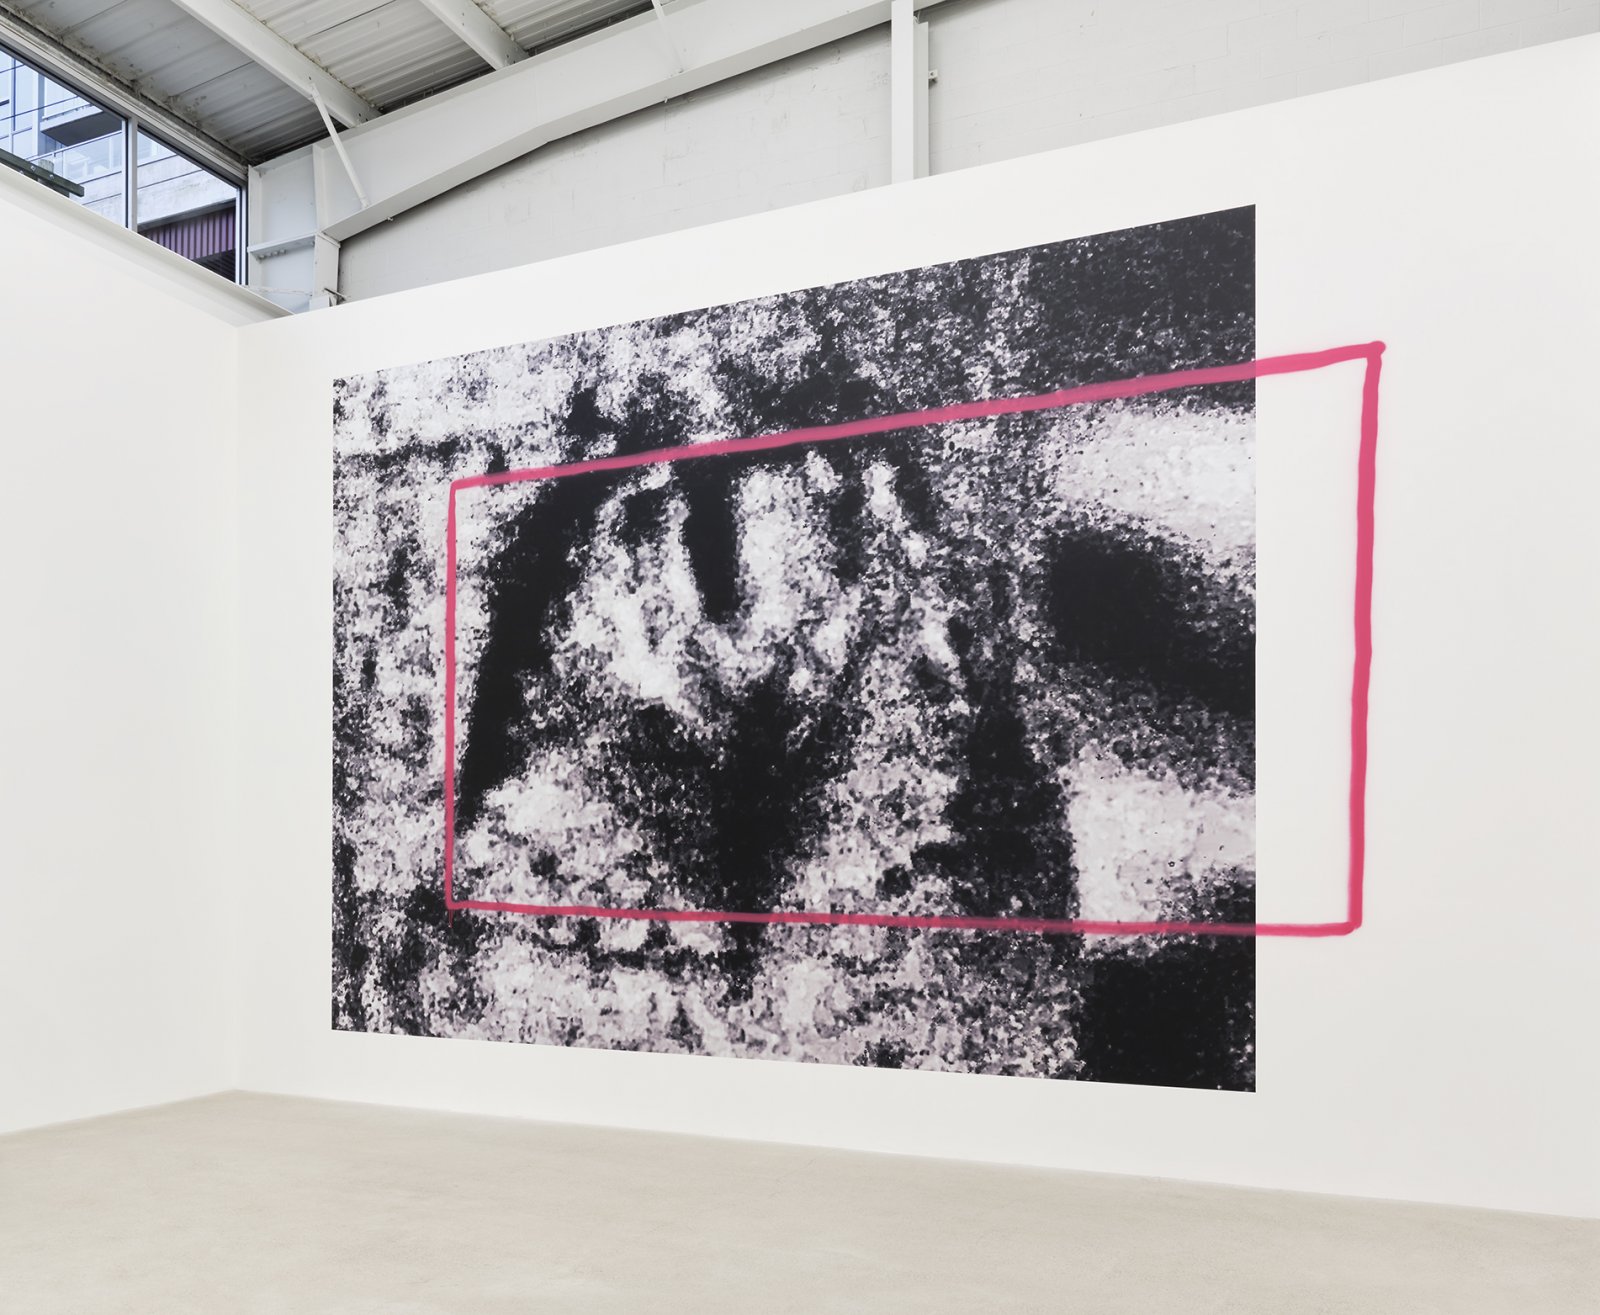 Duane Linklater, latealex, 2020, vinyl, spray paint, 182 x 261 in. (462 x 663 cm) by Duane Linklater